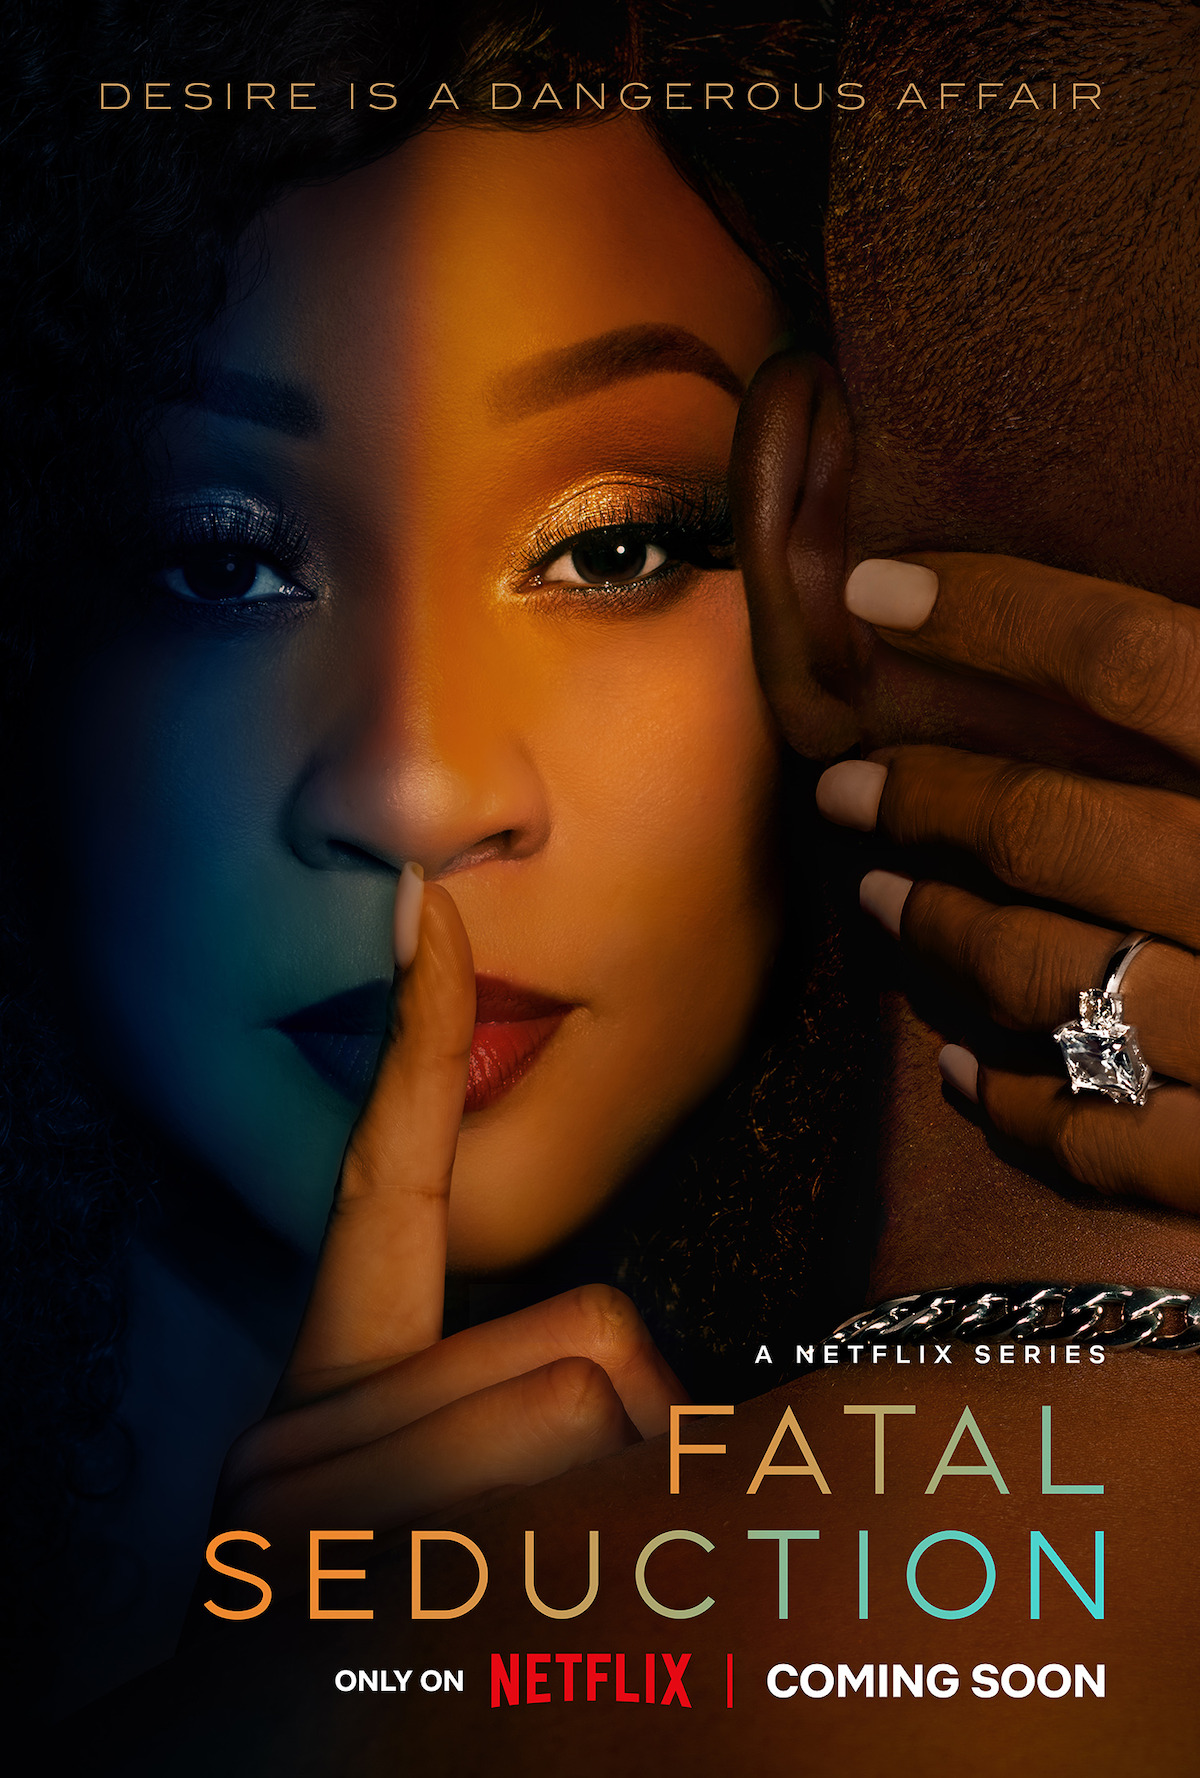 Fatal Seduction Cast, Plot, Release Date and Trailer image photo